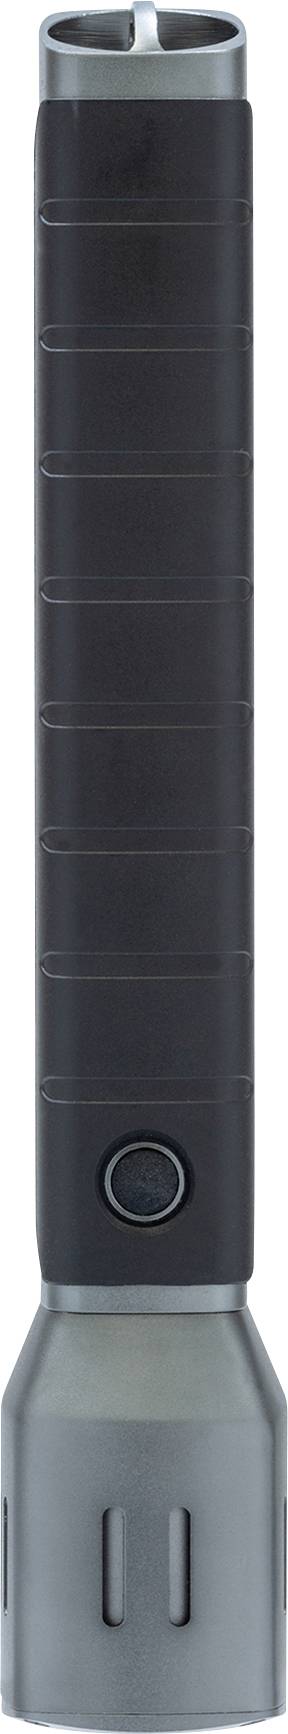 ABUS TL-525 LED Taschenlampe batteriebetrieben 500 lm 5.5 h 380 g